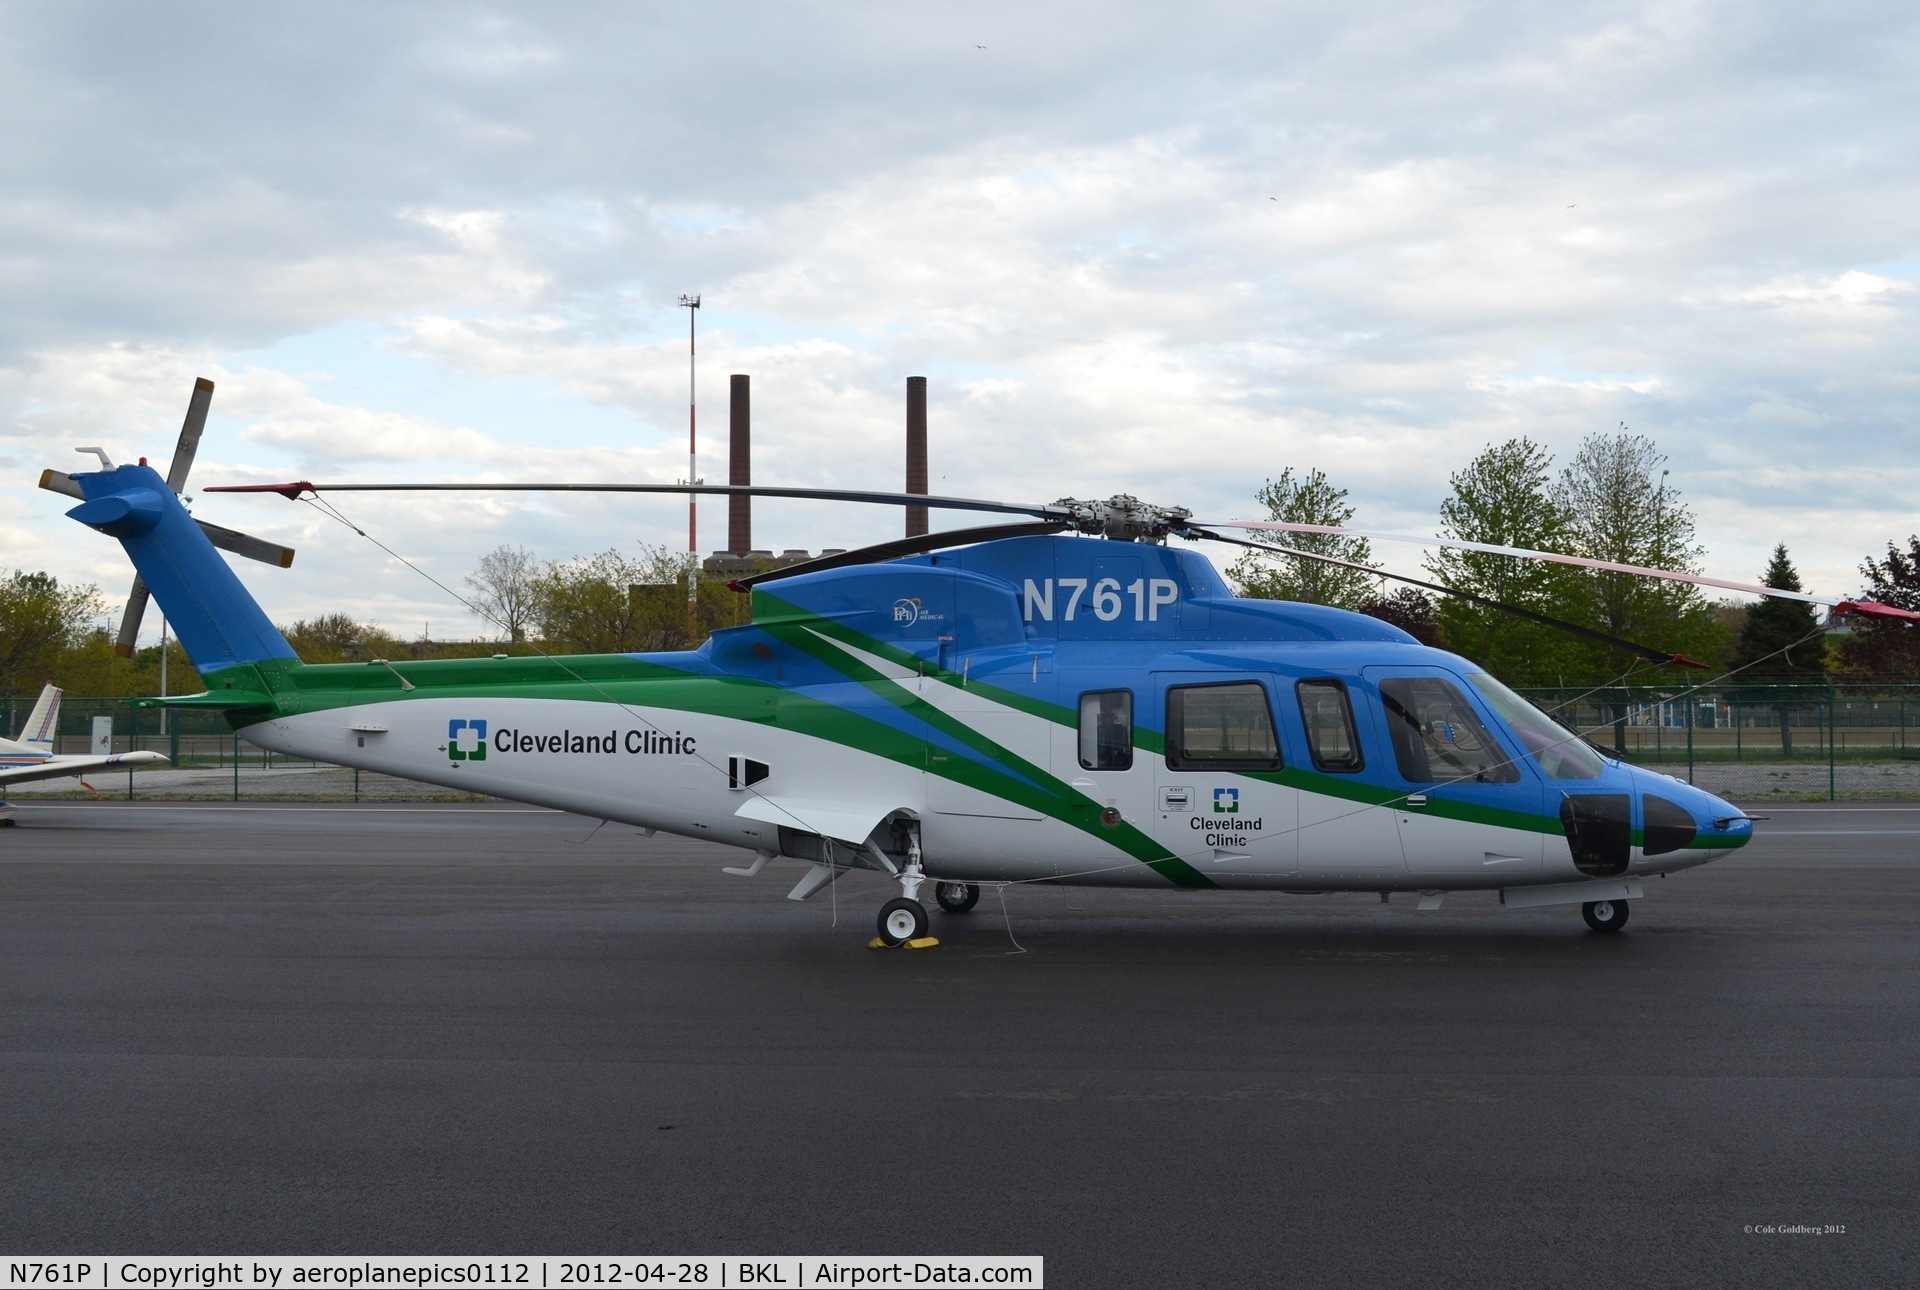 N761P, 2005 Sikorsky S-76C C/N 760588, N761P, seen in the Cleveland Clinic's new Lifeflight colors.